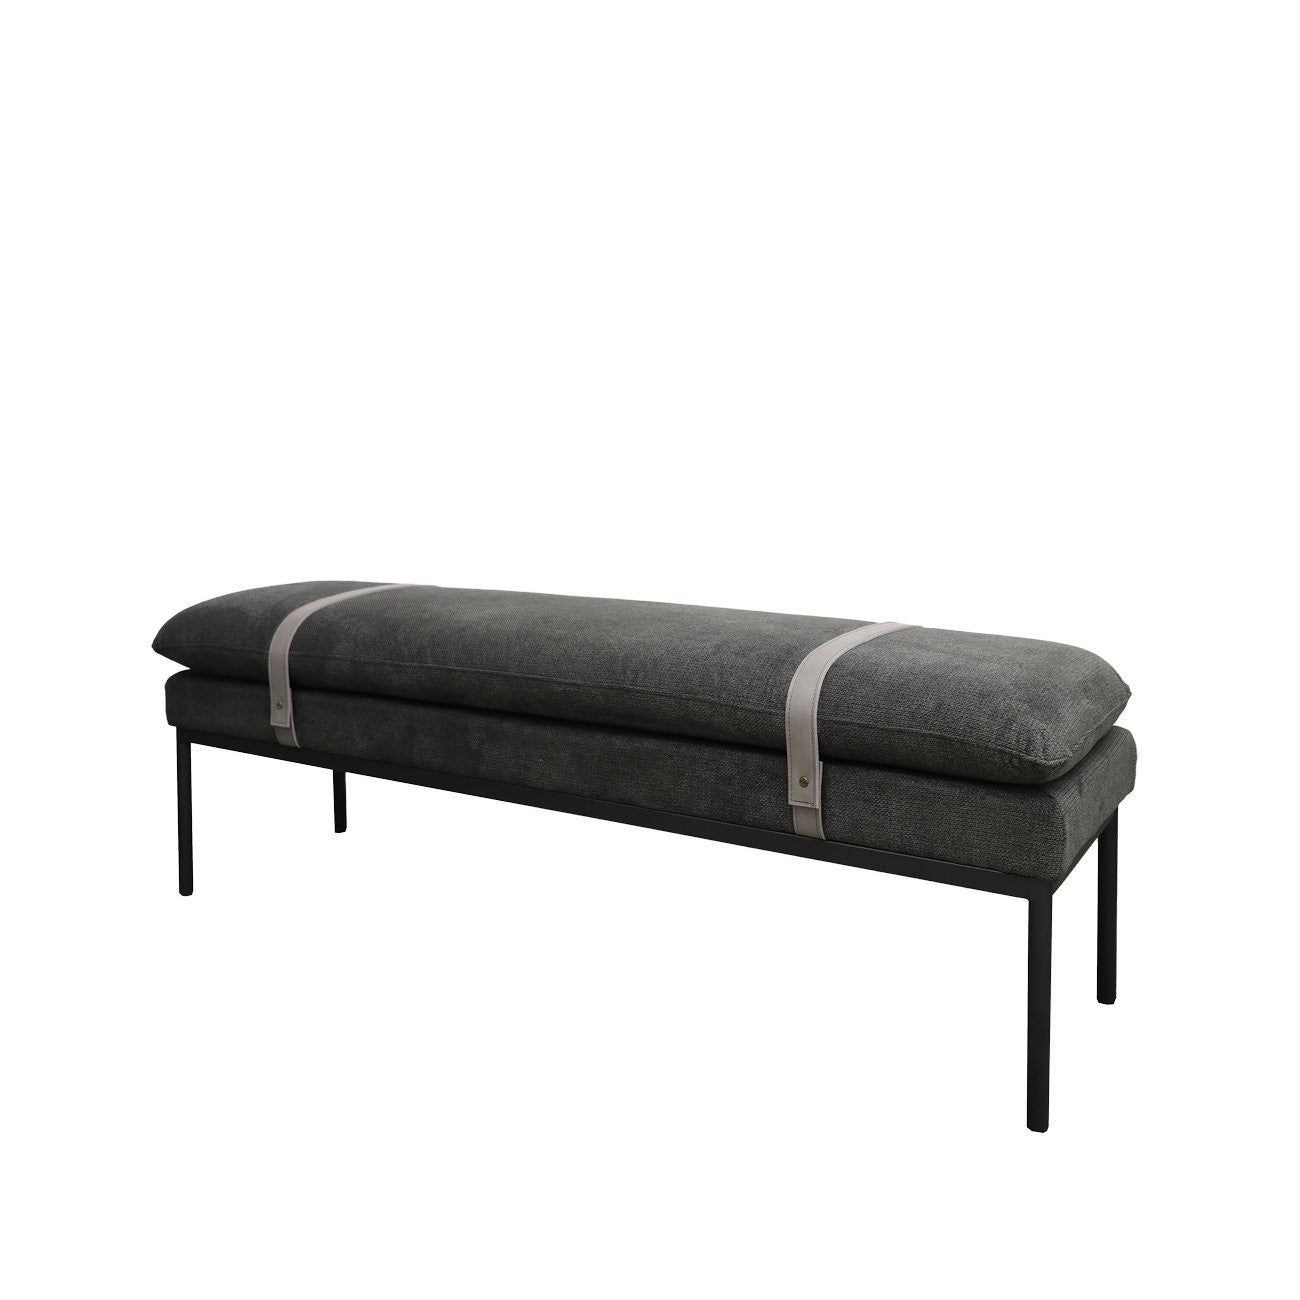 Baxter Ottoman/Bench Seat - Charcoal